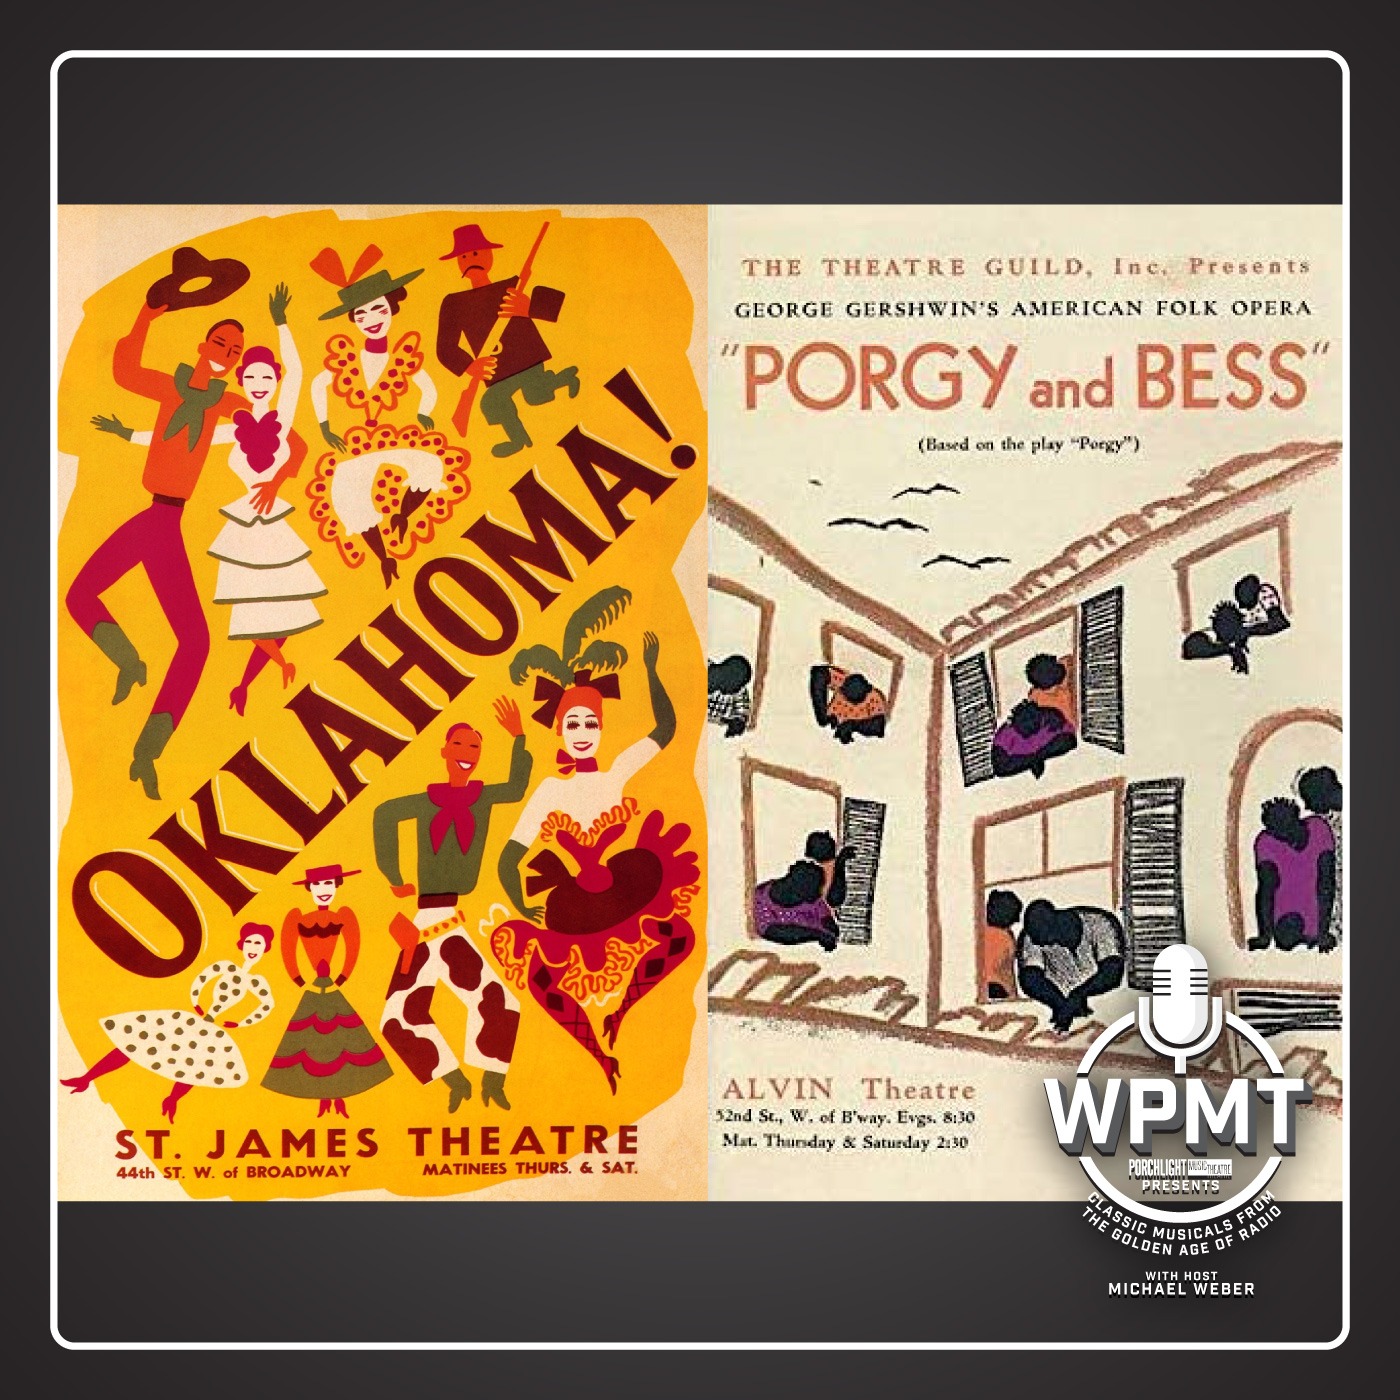 WPMT #93: Oklahoma! / Porgy and Bess